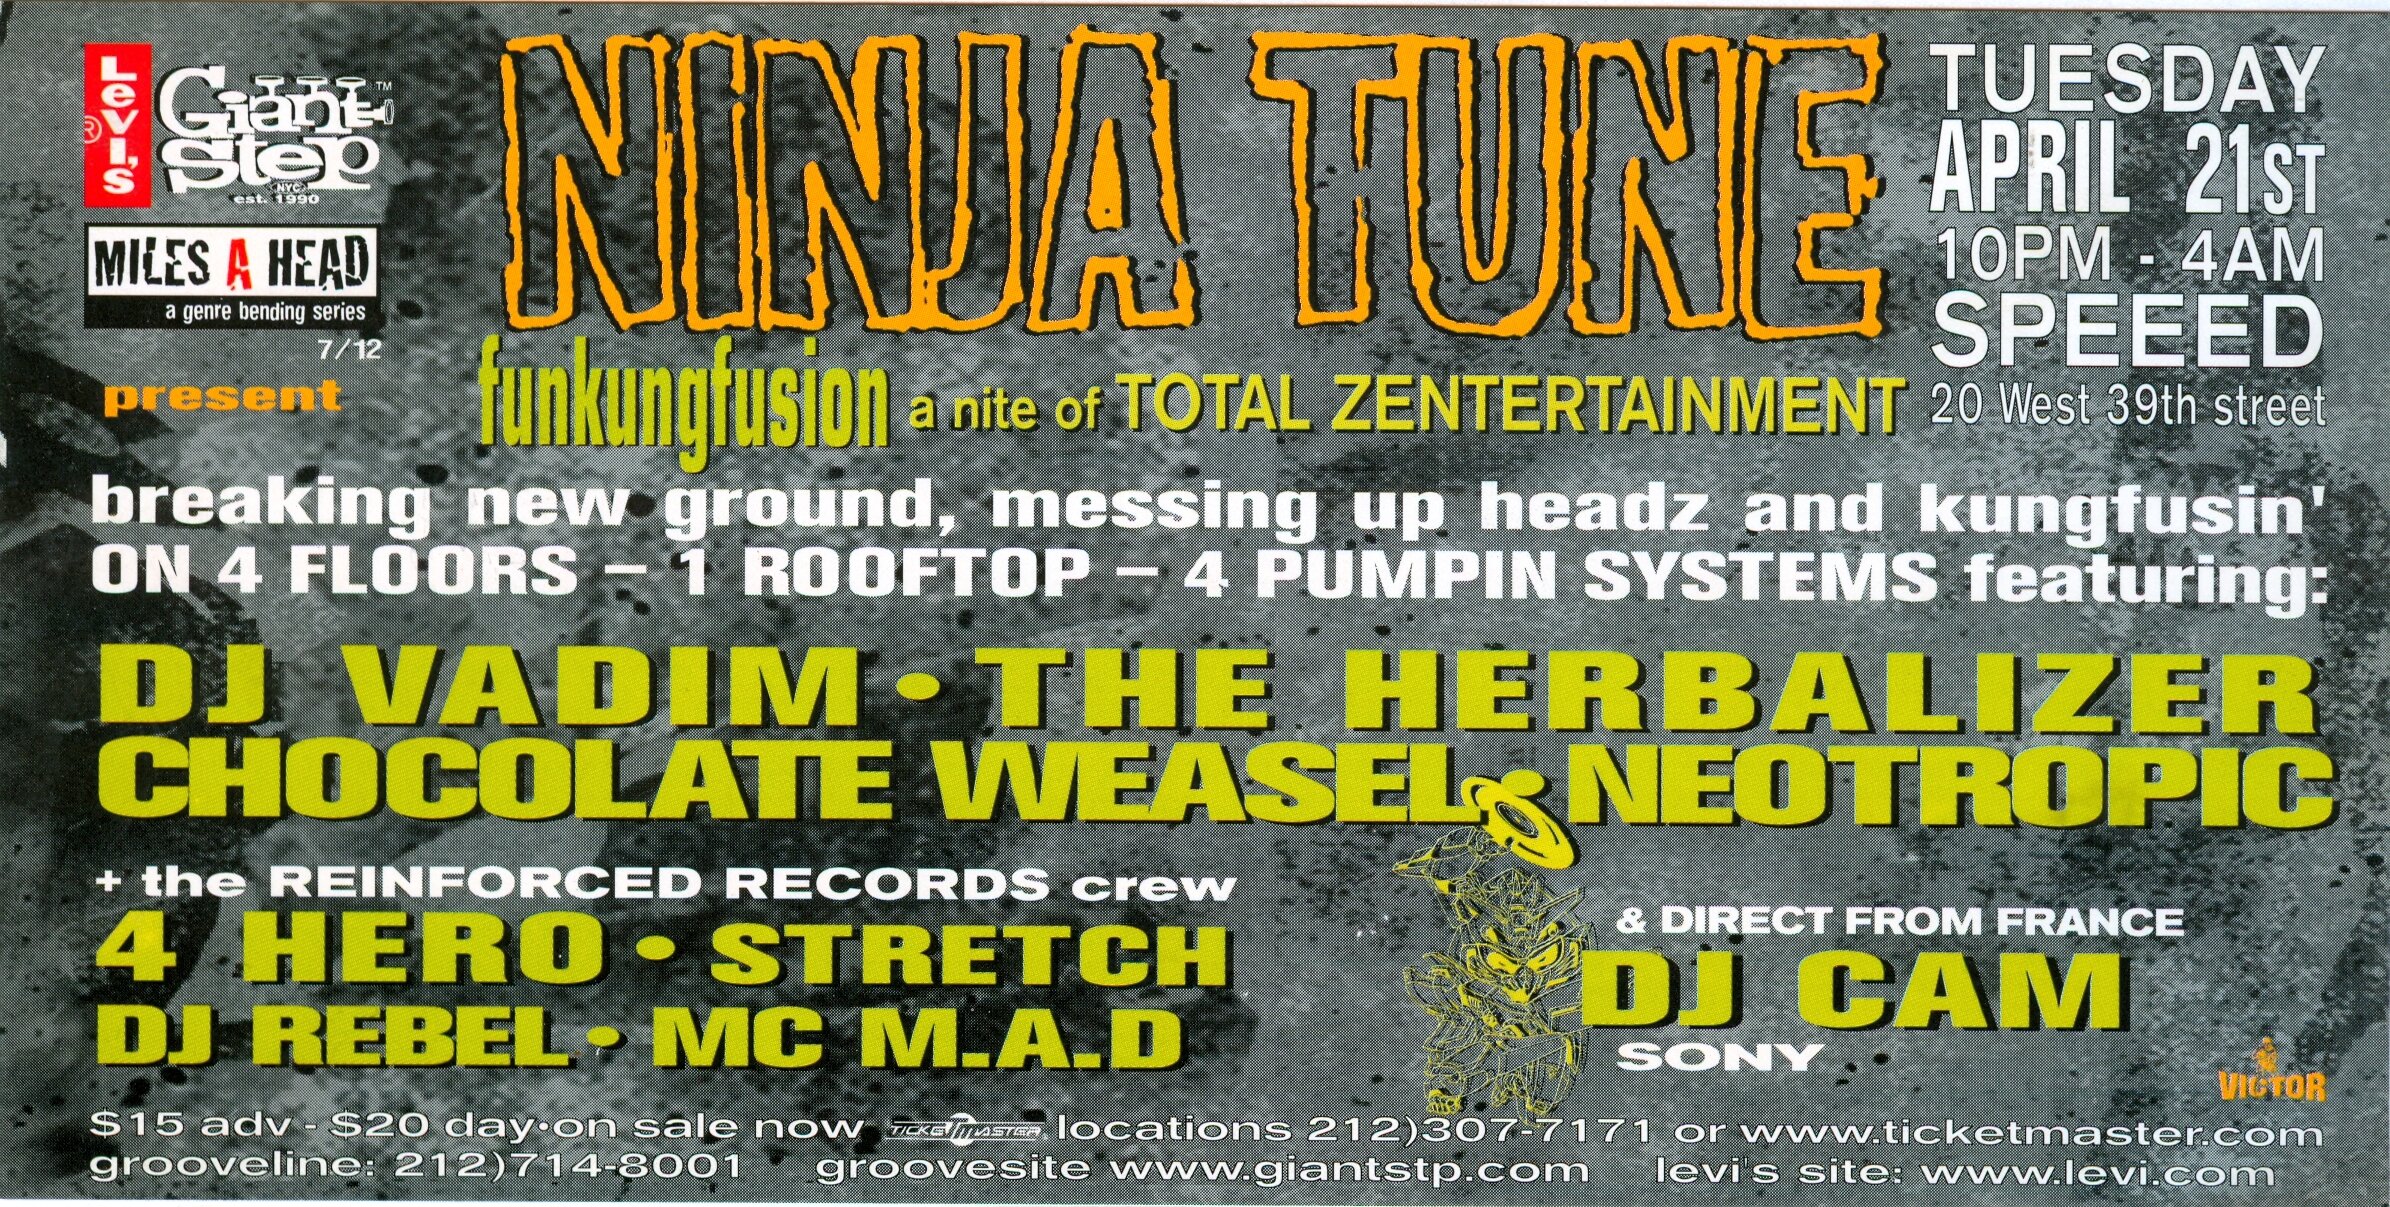 04-21-98 Ninja Tune2.jpg